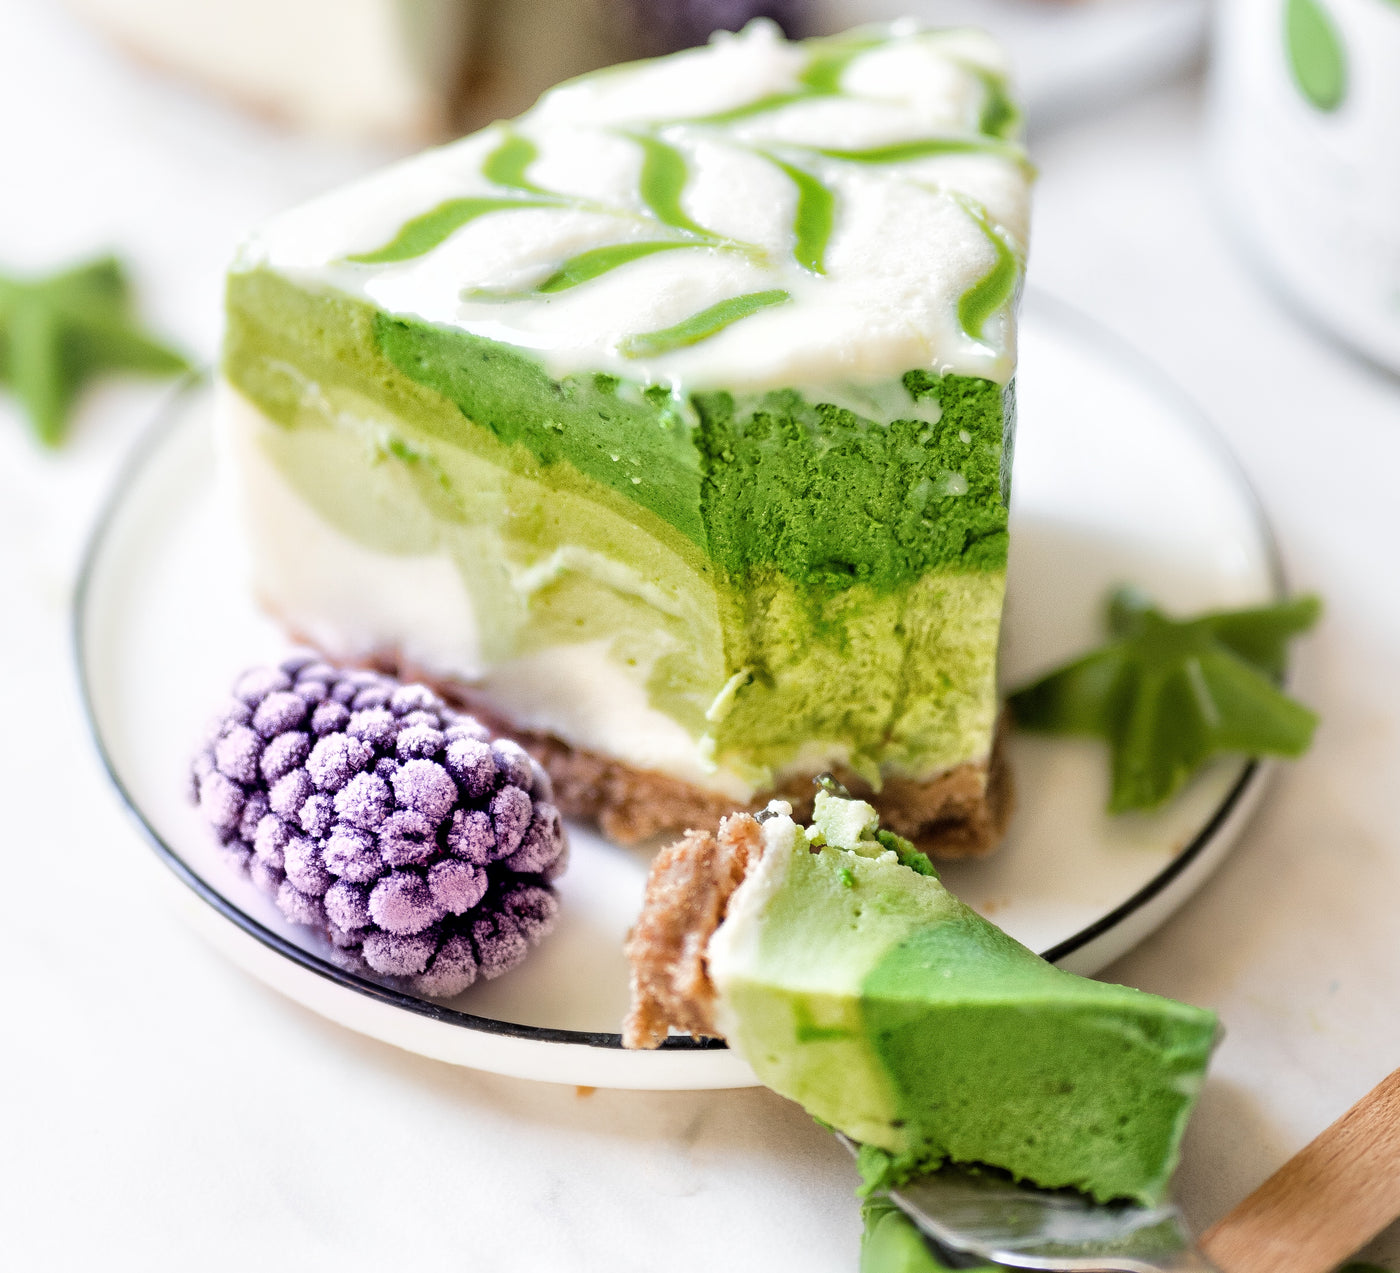 Matcha powder cheesecake, no bake matcha cake, fancy green tea cake mousse